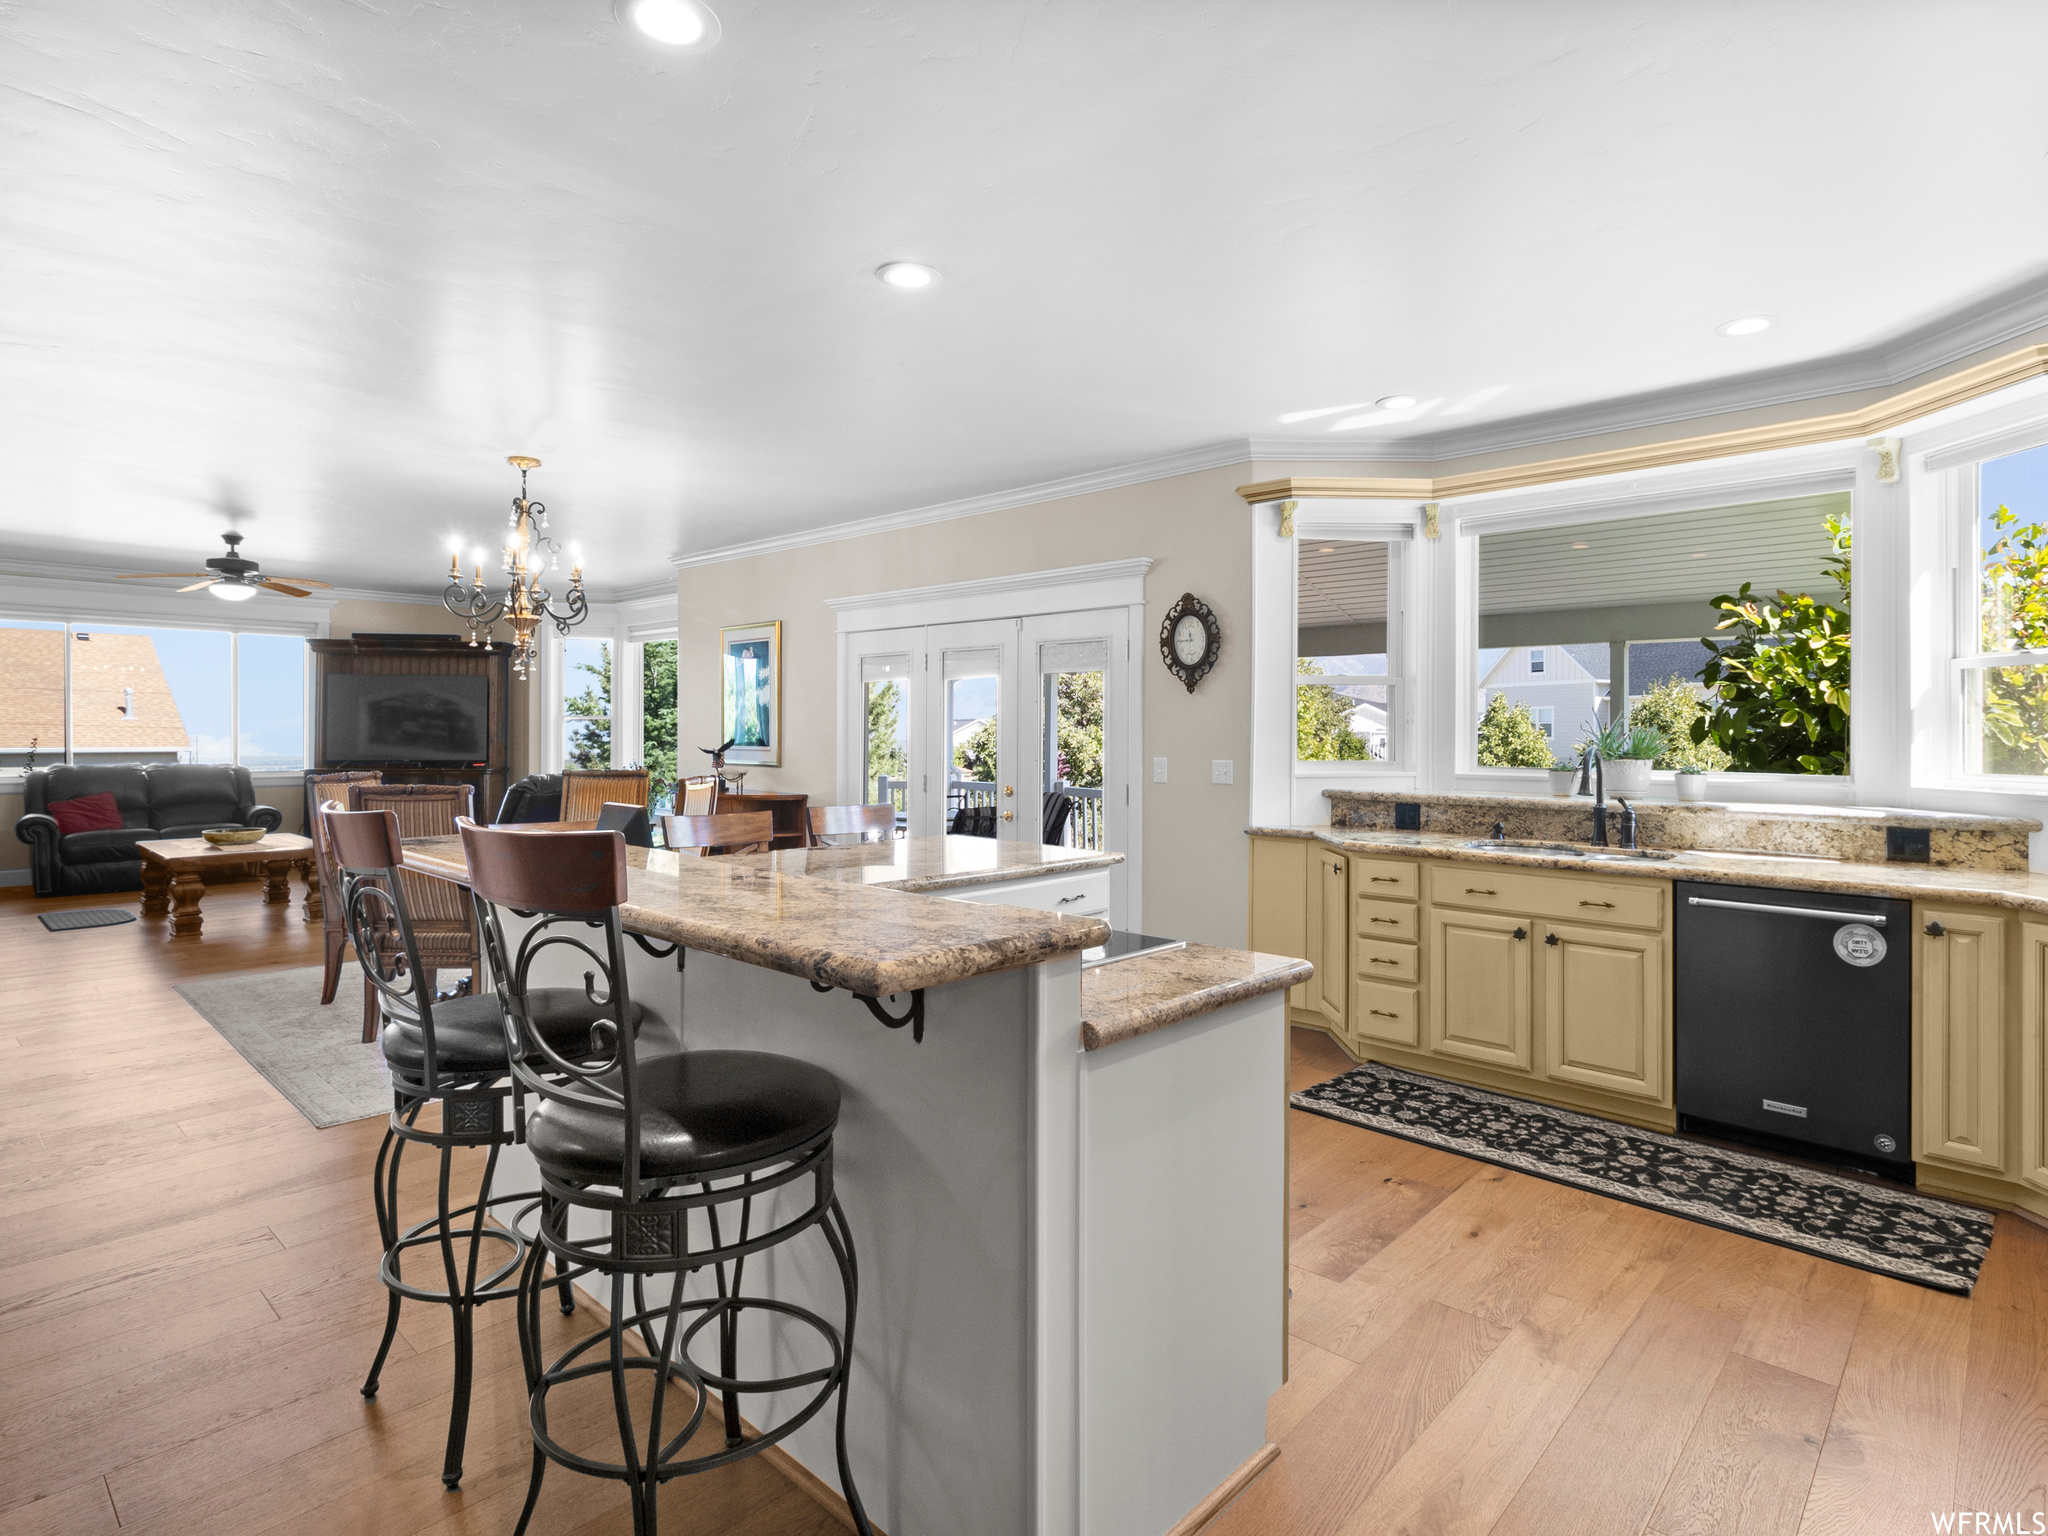 Kitchen featuring a kitchen island, plenty of natural light, black dishwasher, a chandelier, light hardwood flooring, and ornamental molding